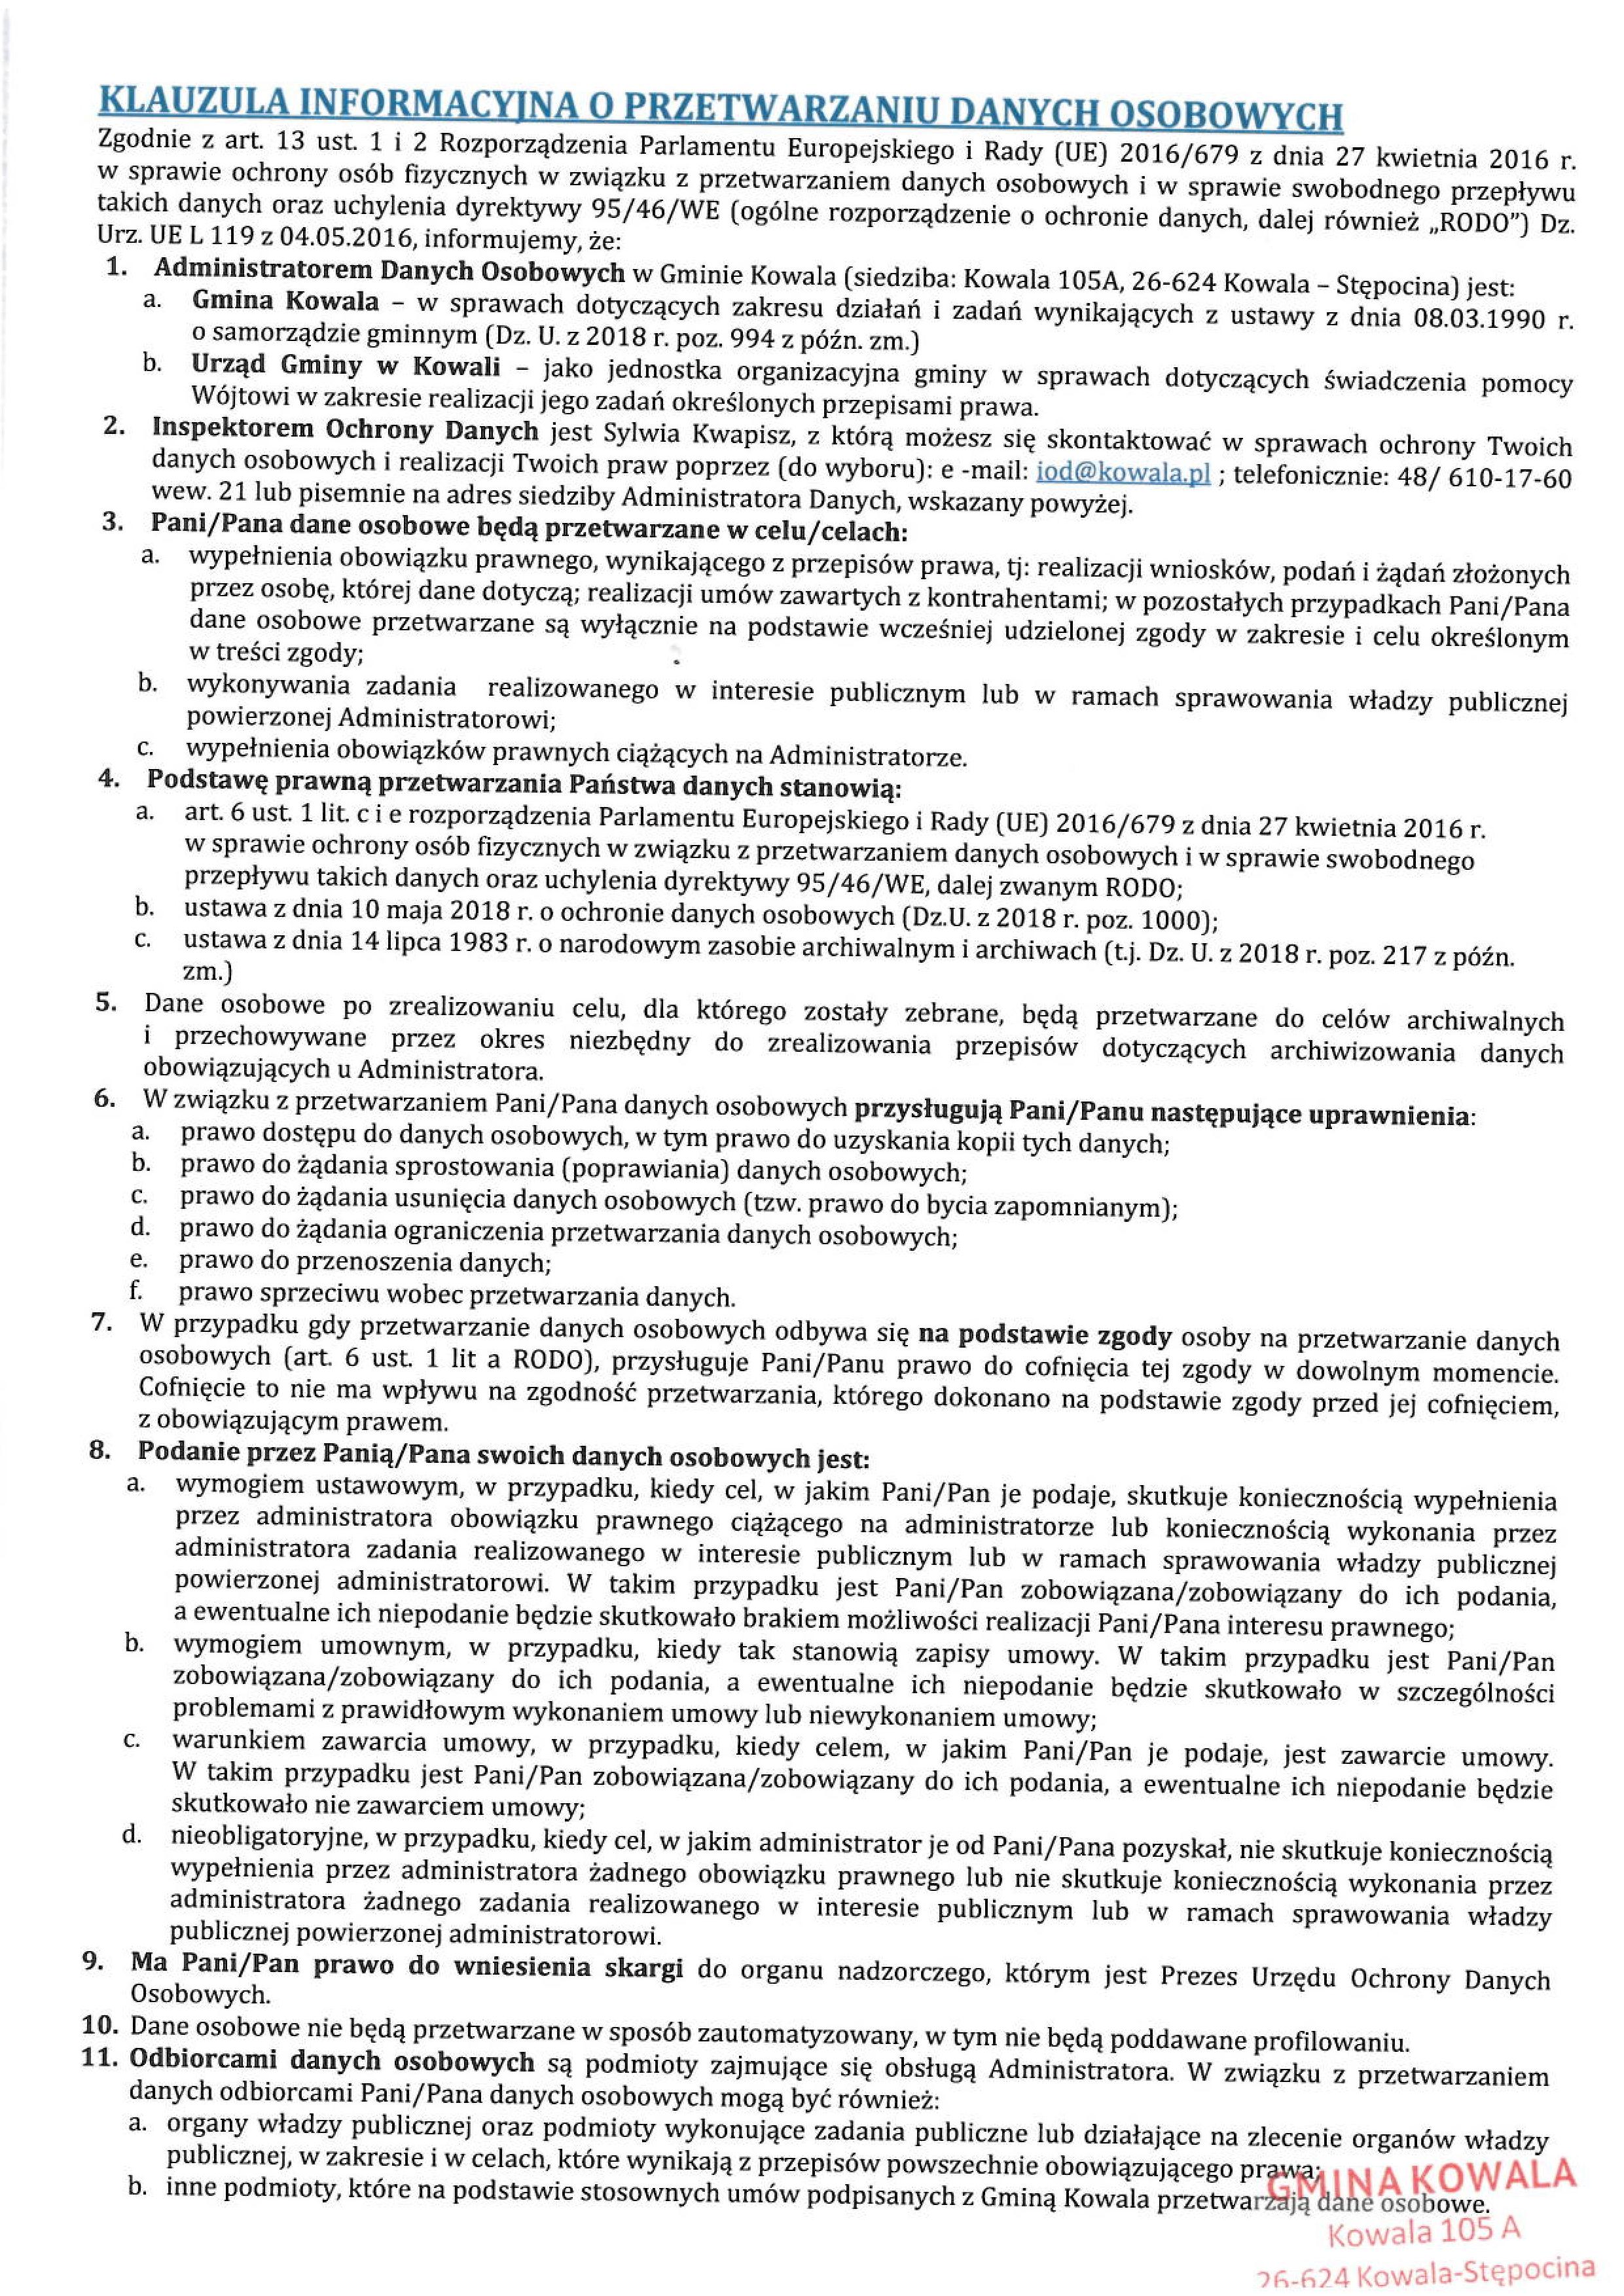       klauzula_informacyjna-page-001.jpg